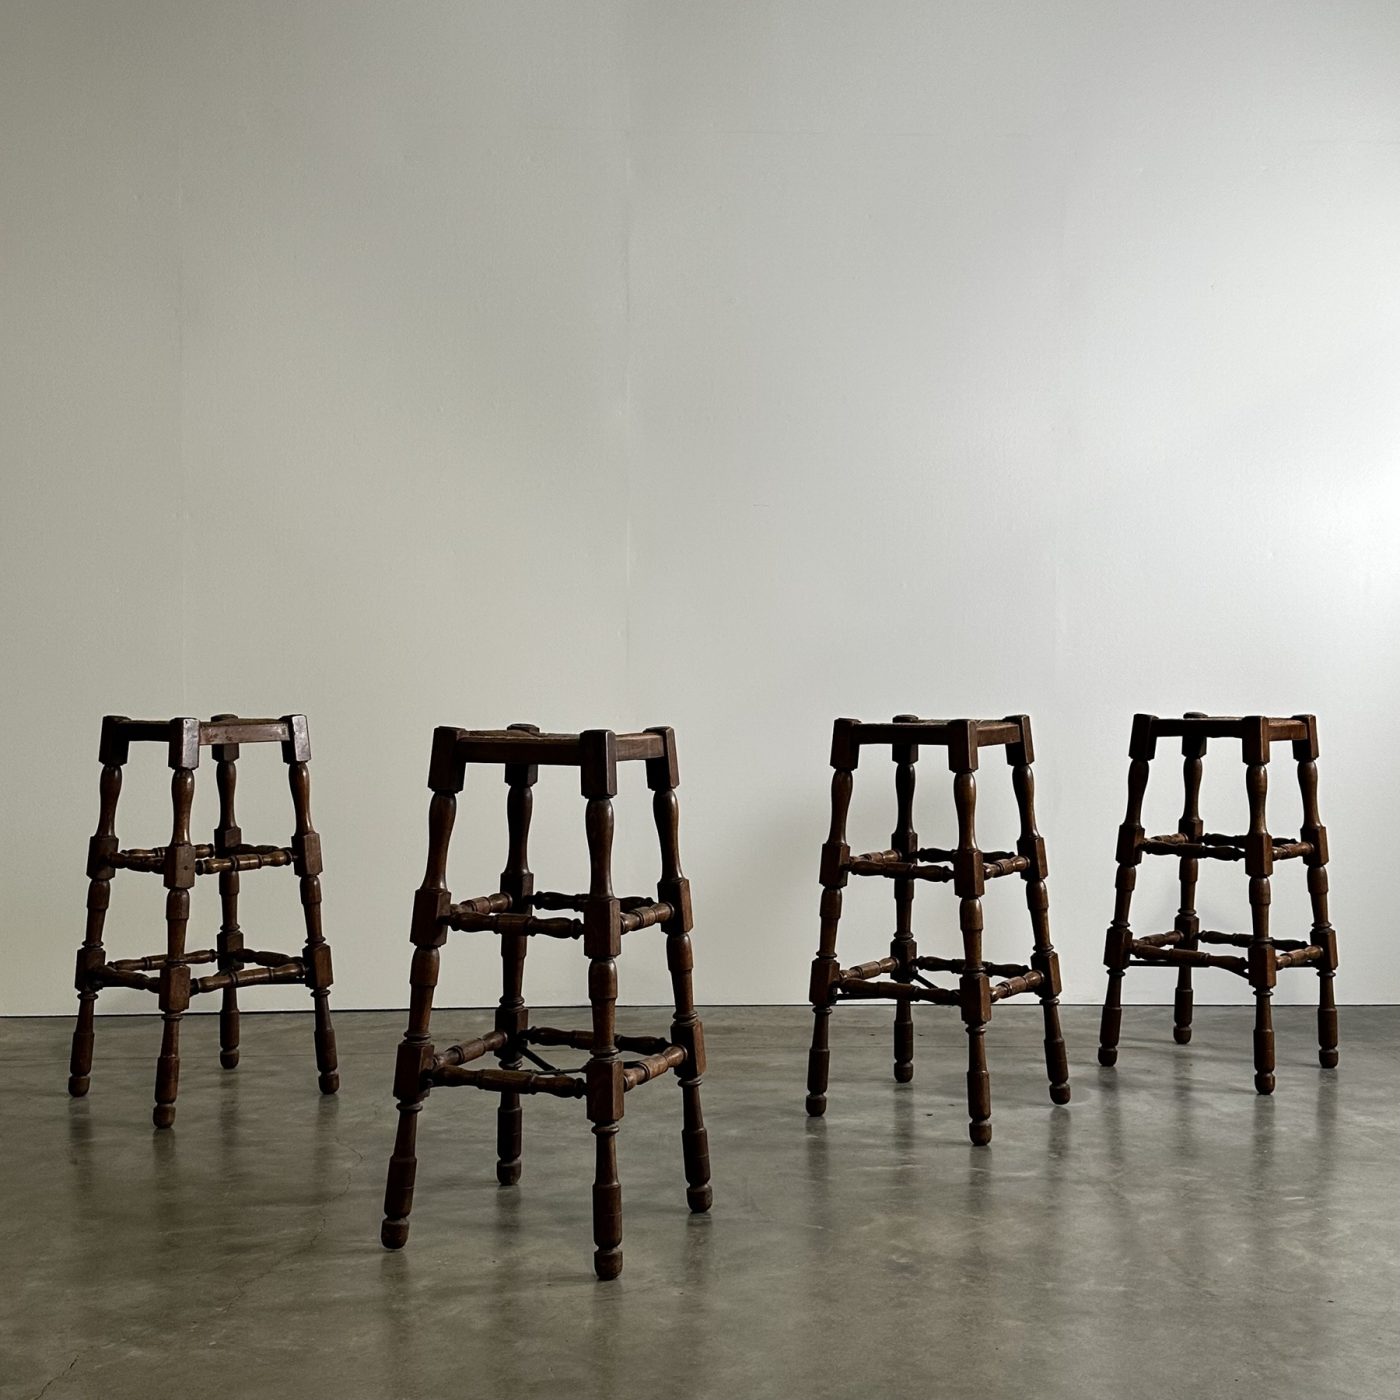 objet-vagabond-high-stools0005